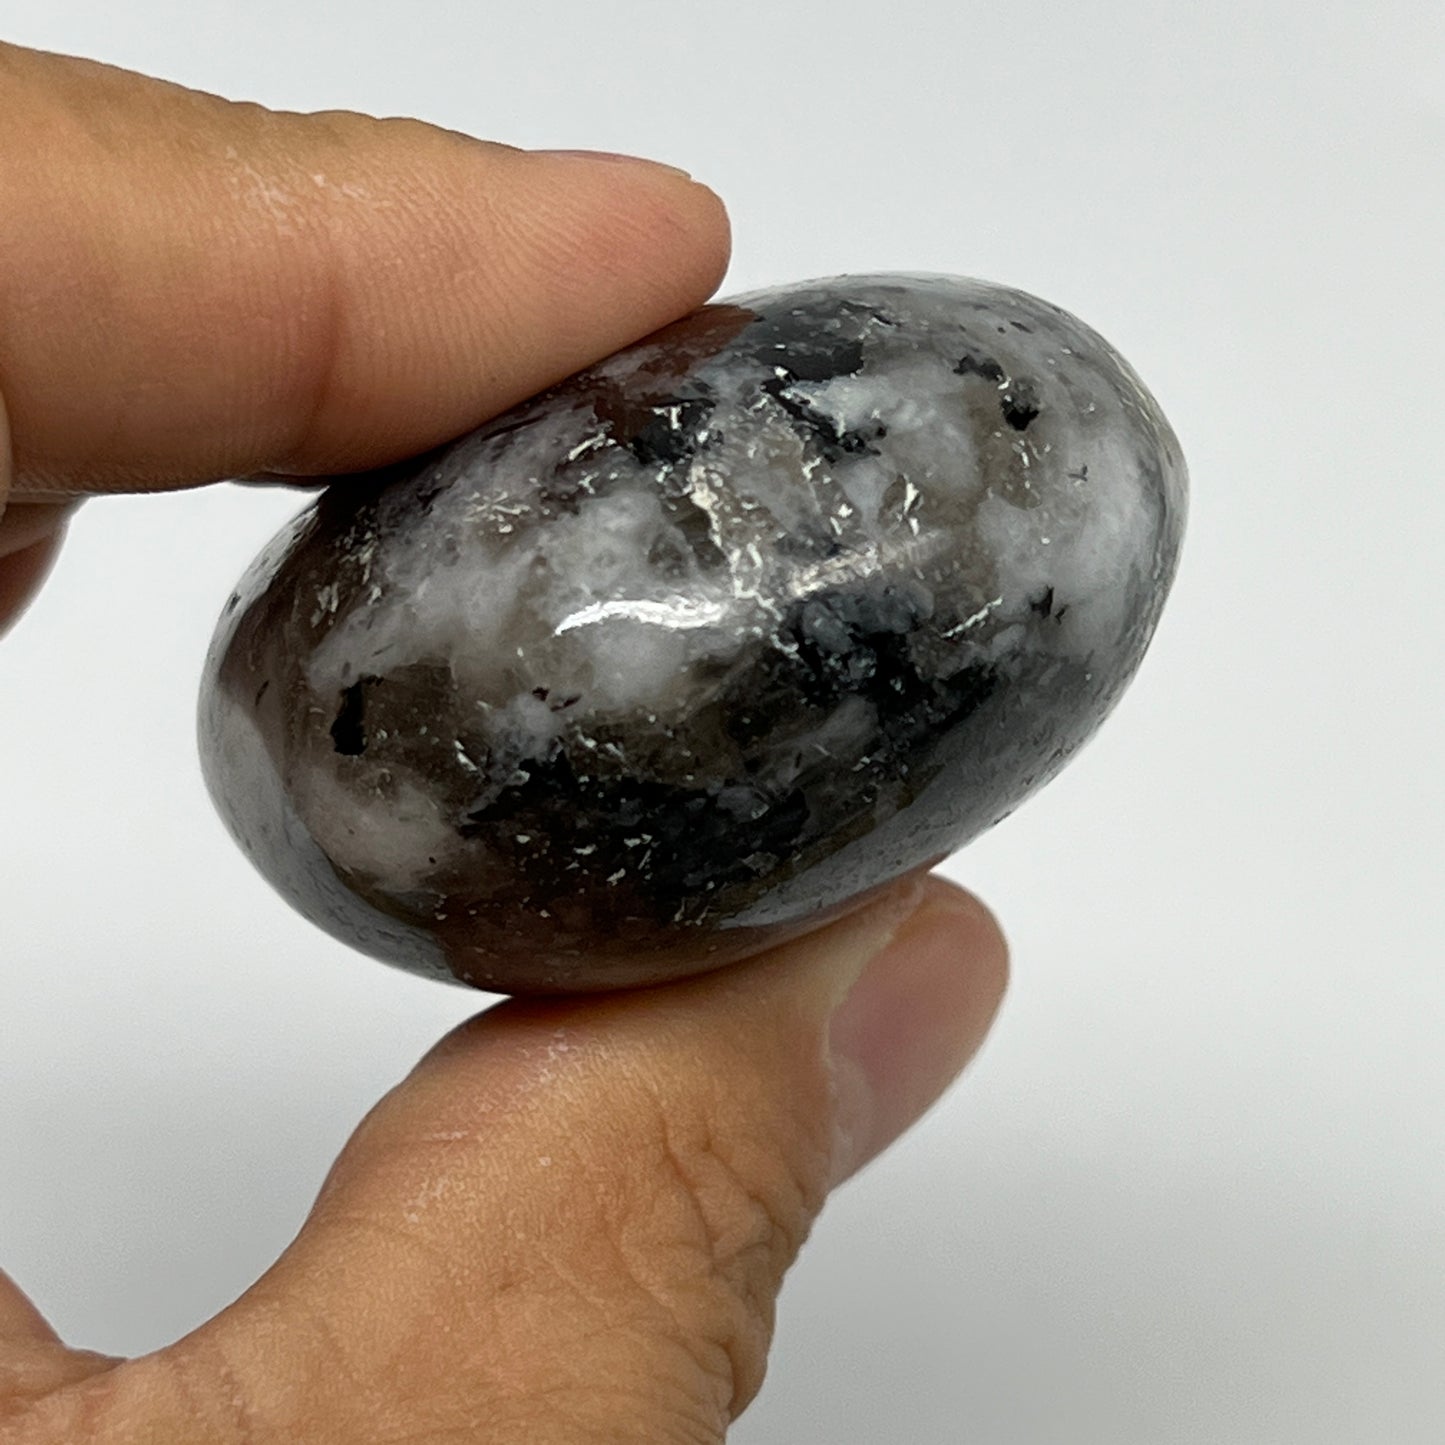 116.5g,2.4"x1.7"x1.1", Rainbow Moonstone Palm-Stone Polished from India, B21267